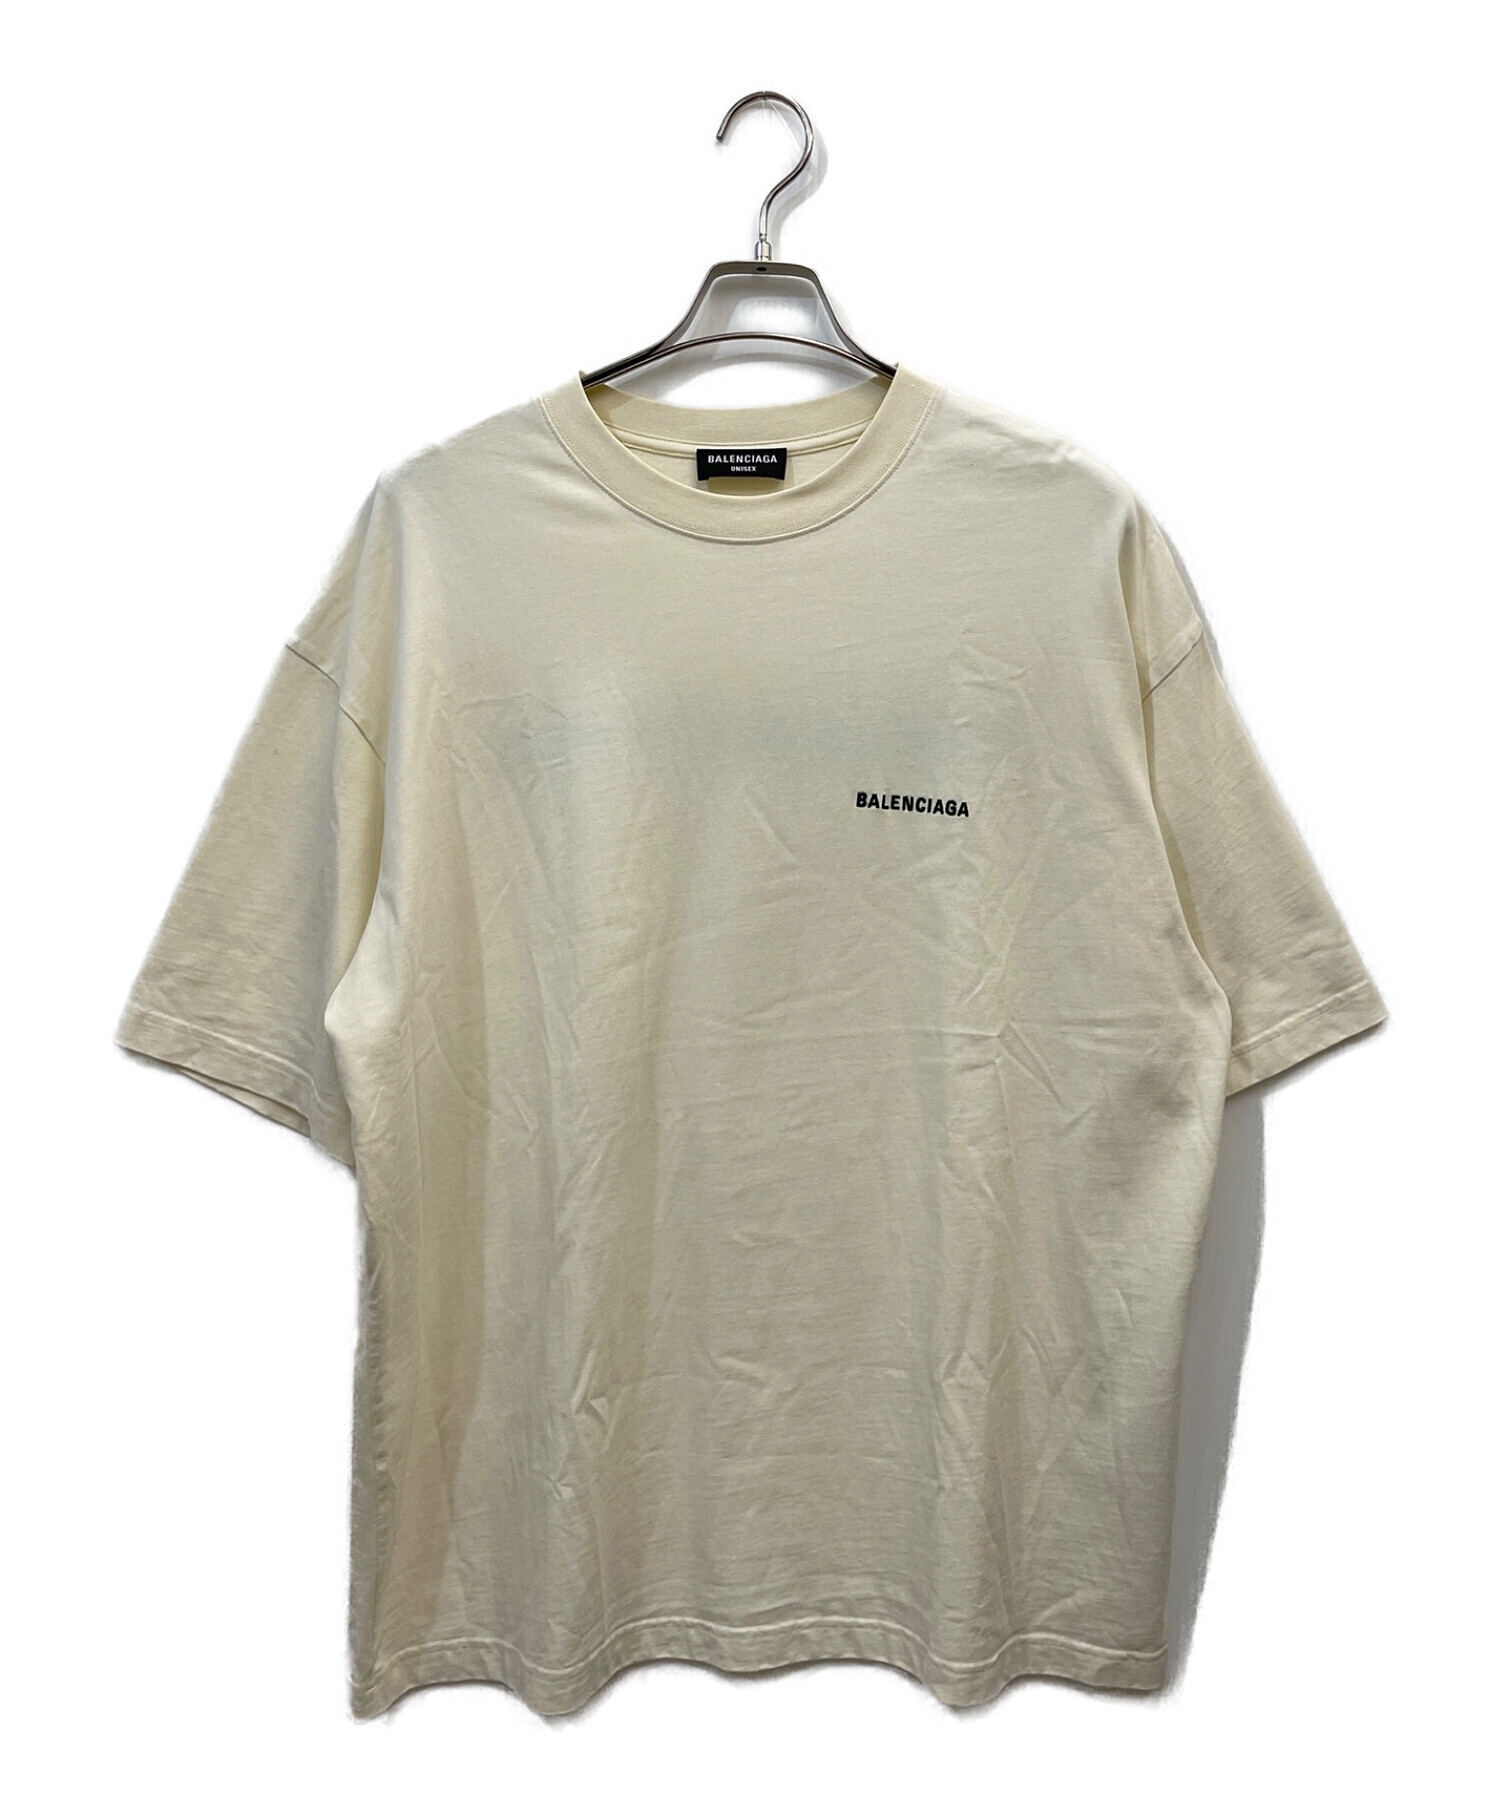 BALENCIAGA (バレンシアガ) ロゴプリントオーバーサイズTシャツ アイボリー サイズ:L